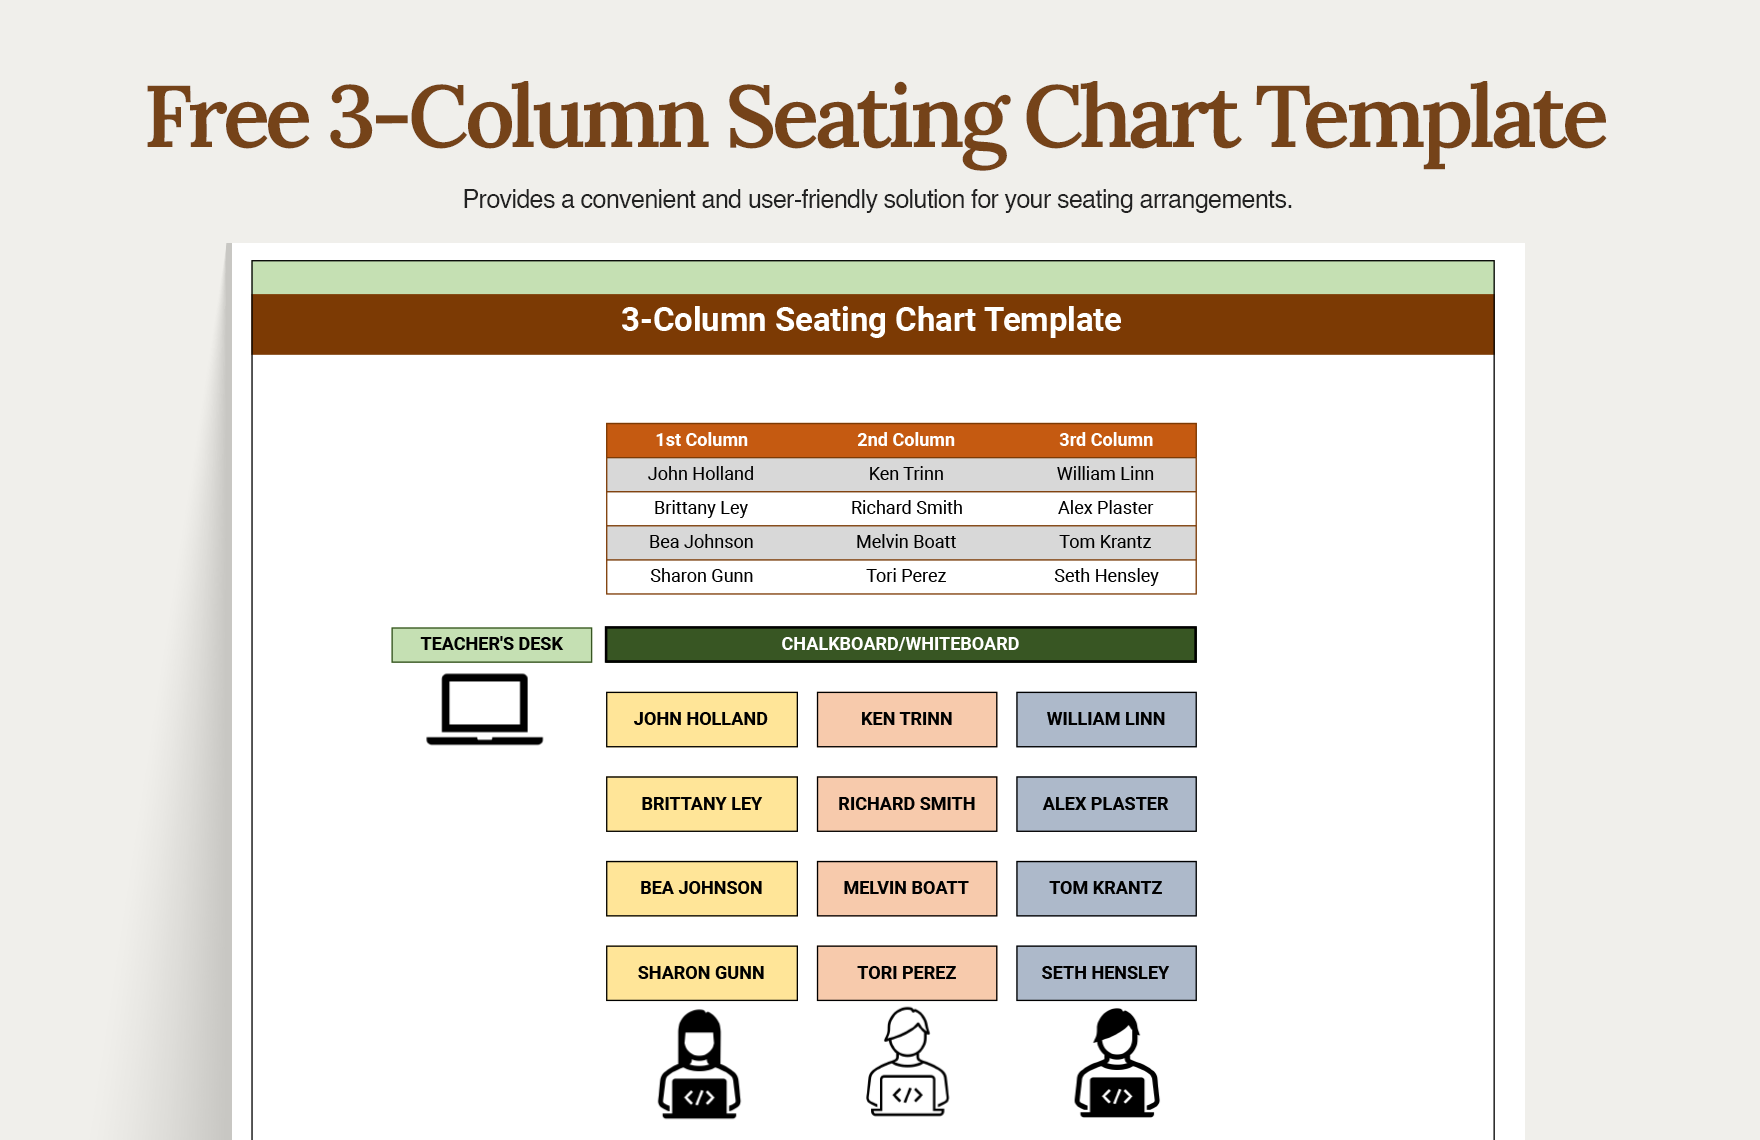 3-Column Seating Chart Template